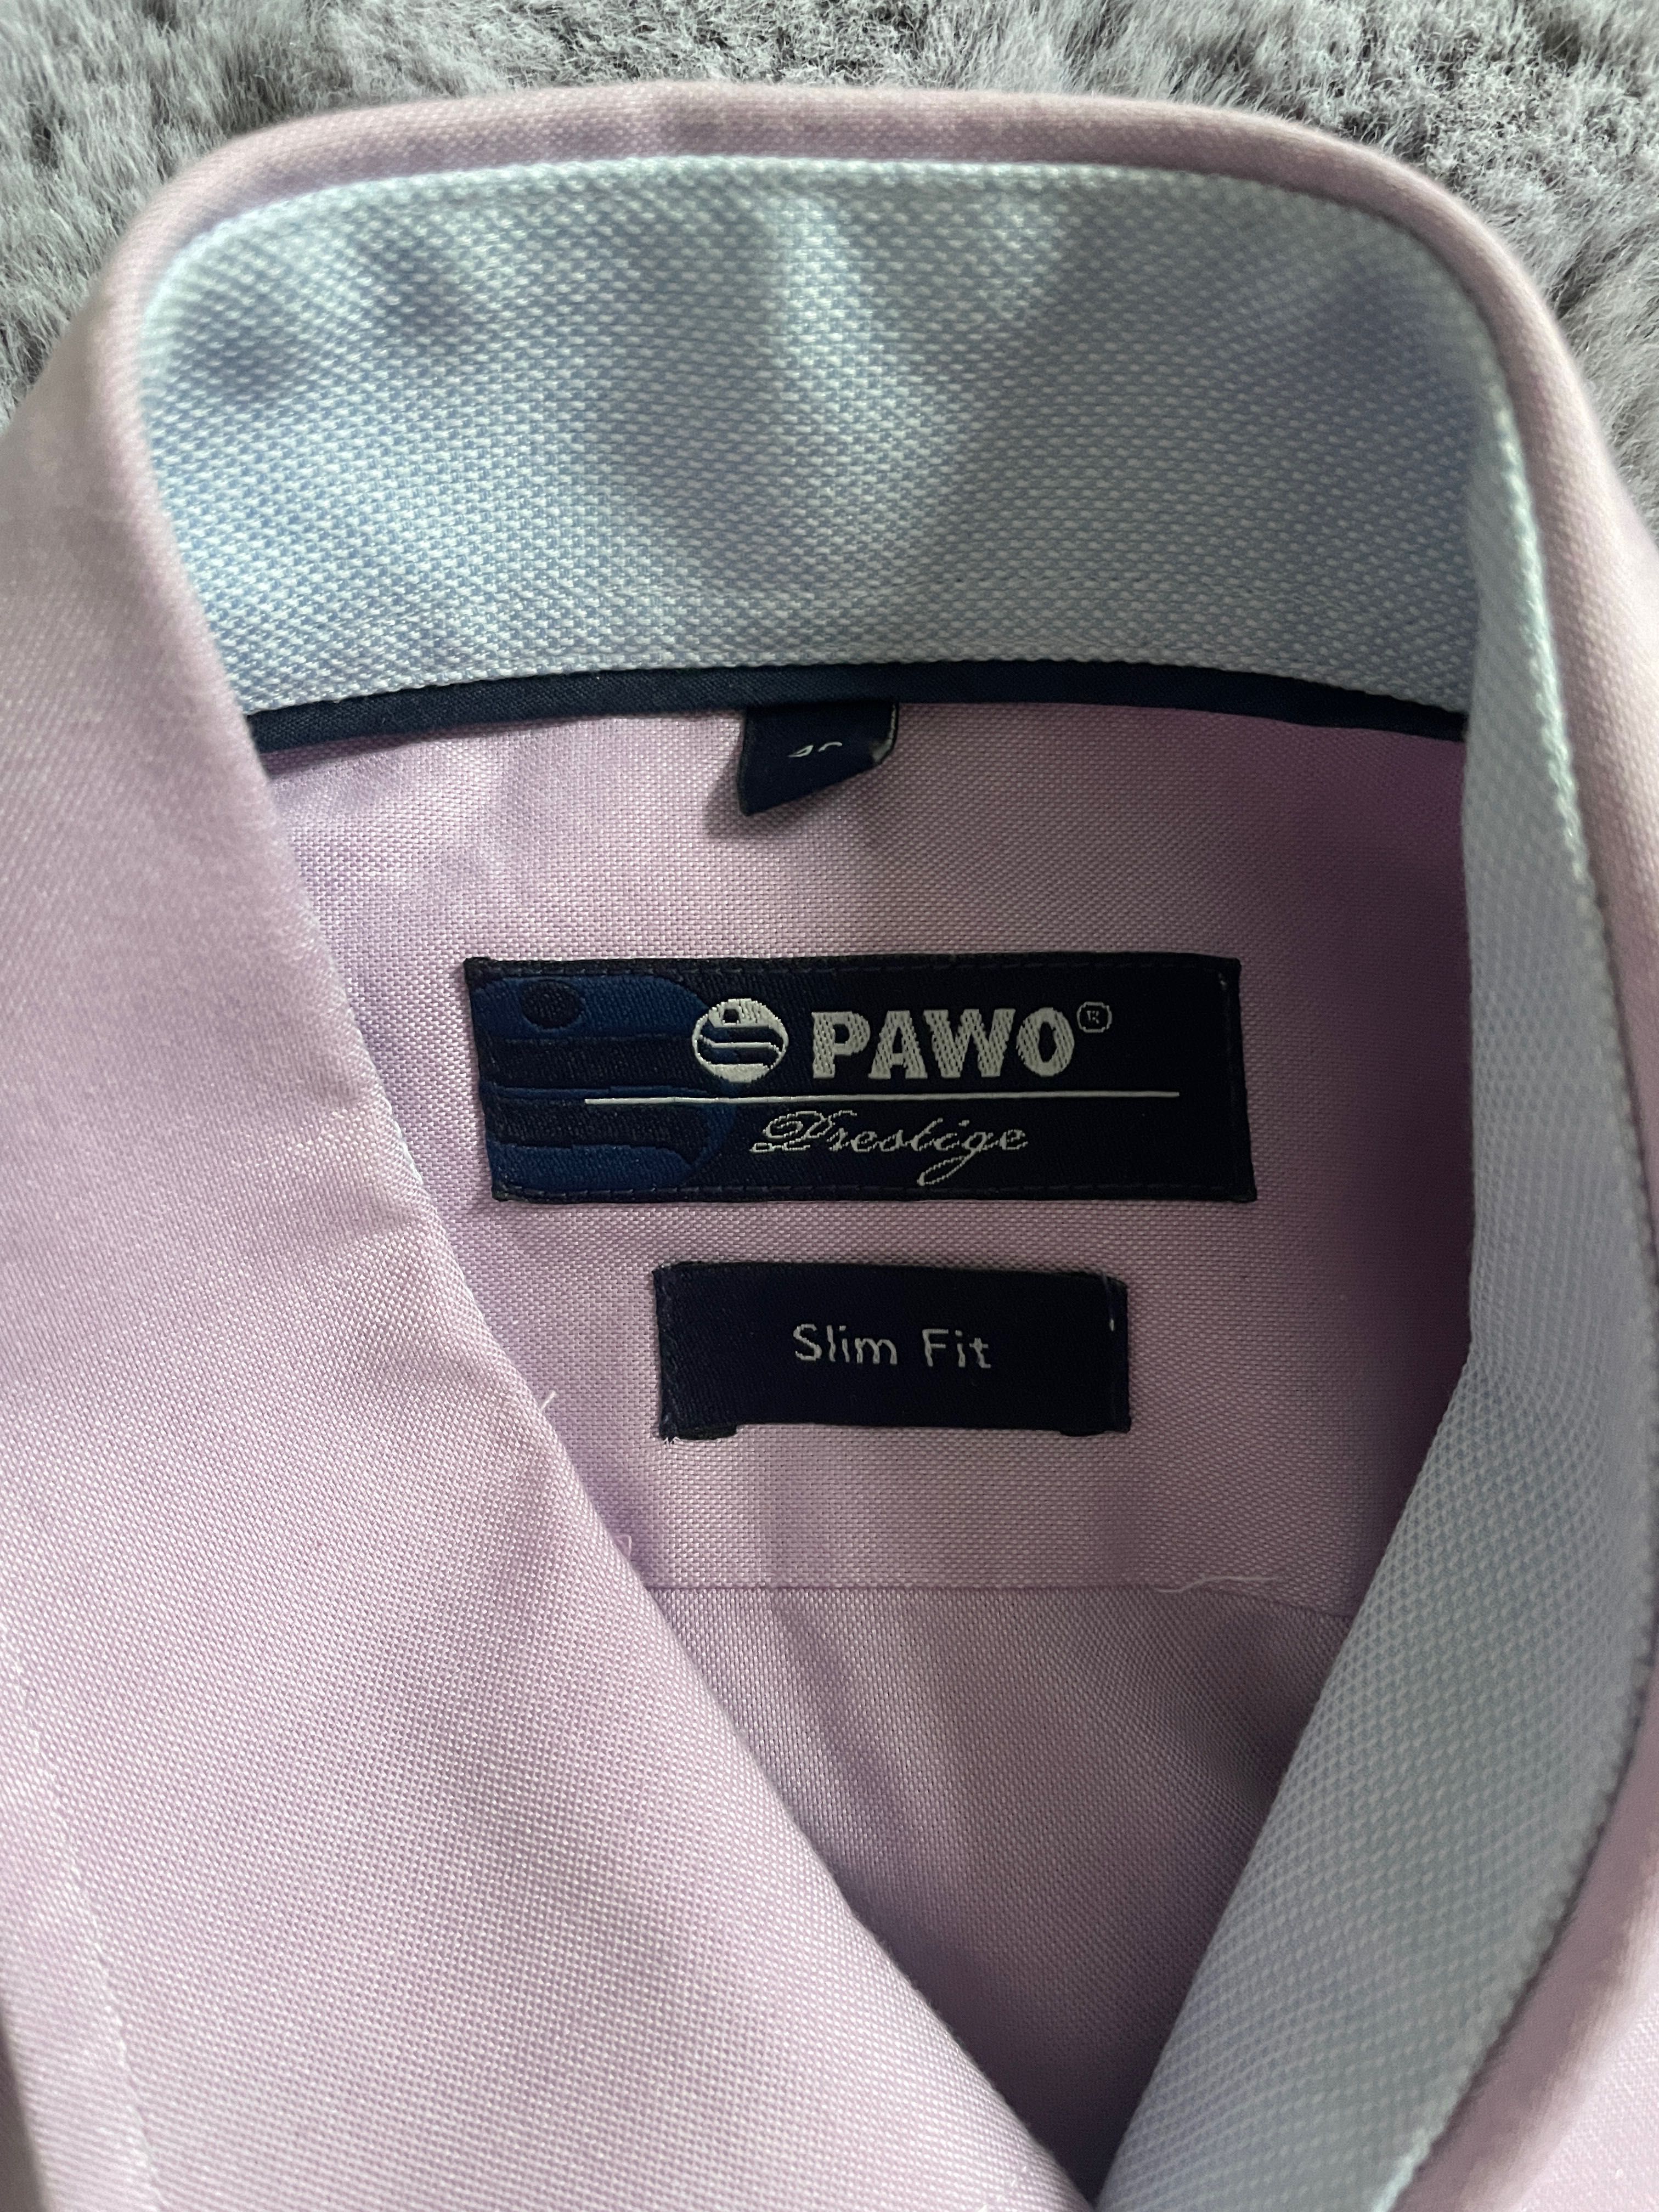 Koszula marki Pawo